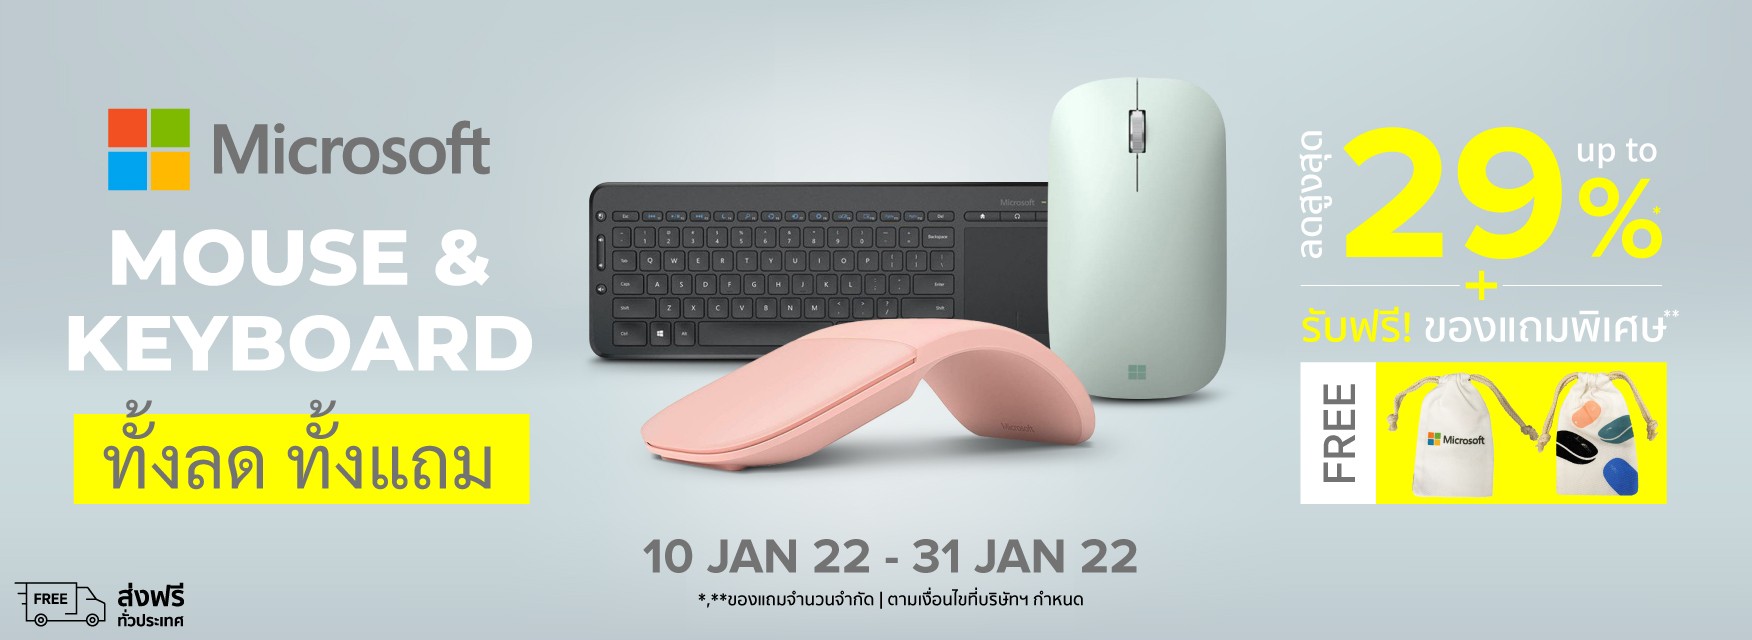 Microsoft Mouse & Keyboard ทั้งลด ทั้งแถม